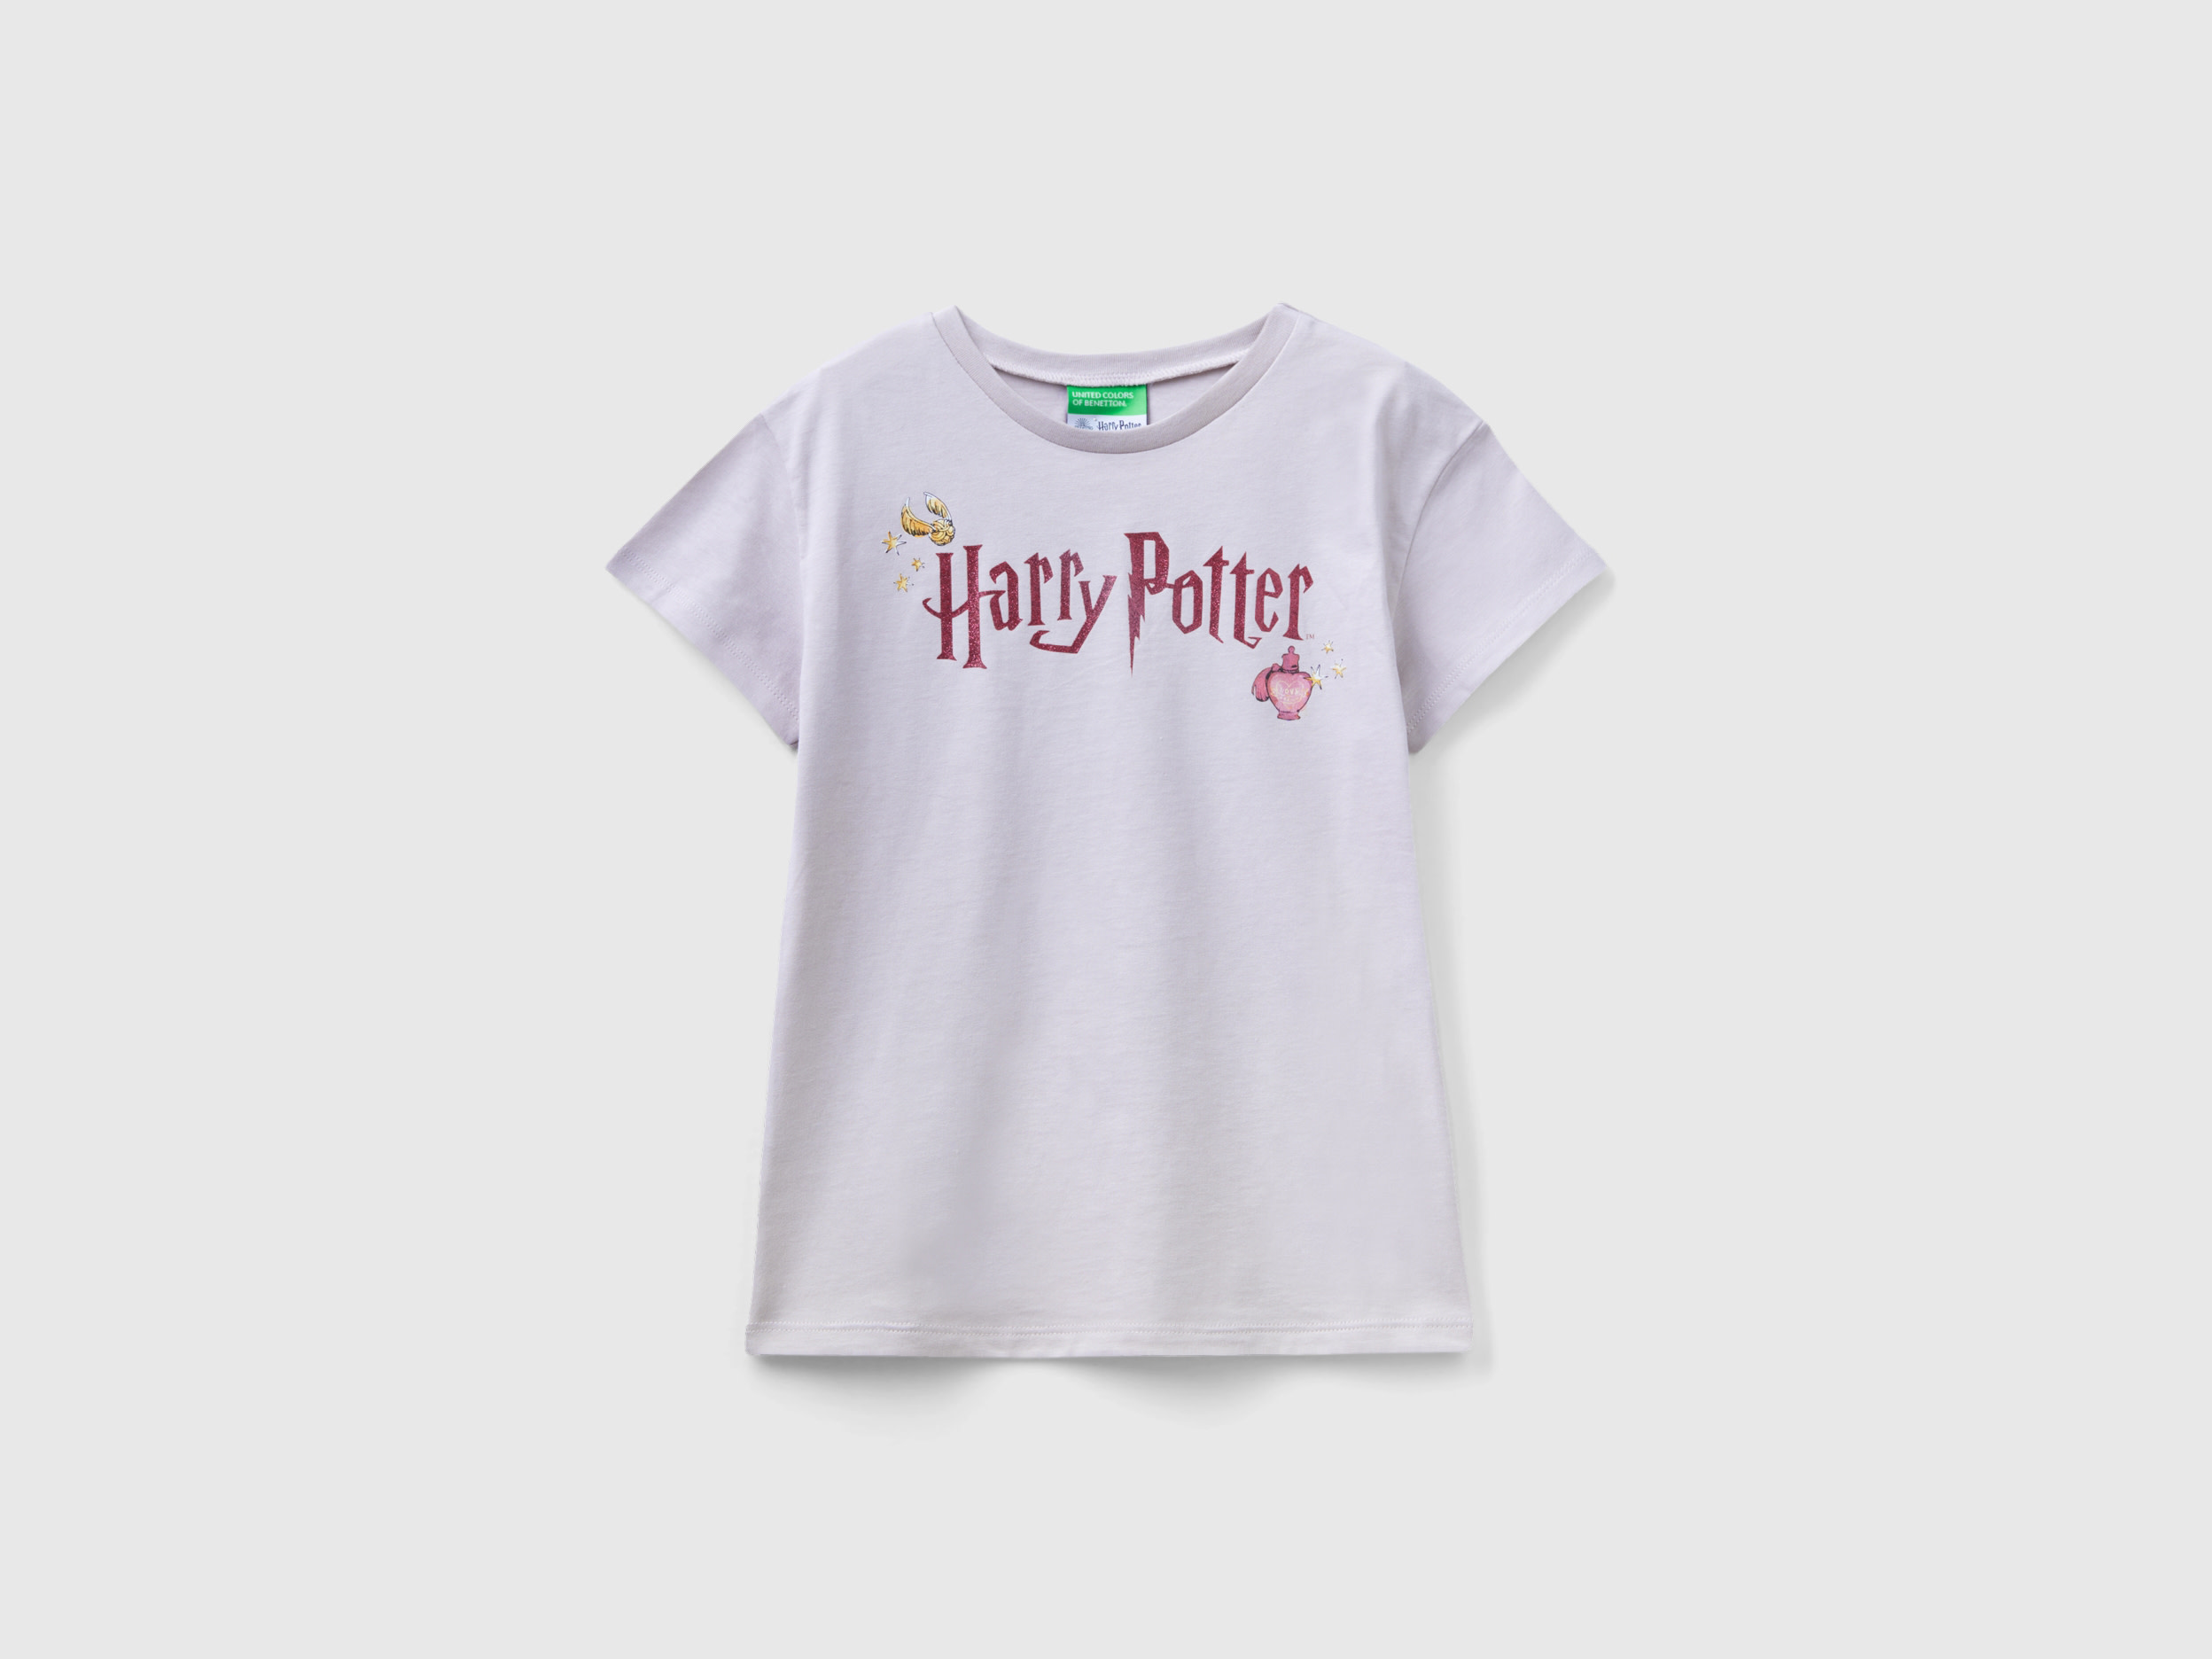 Benetton, Short Sleeve Harry Potter T-shirt, size S, Light Gray, Kids